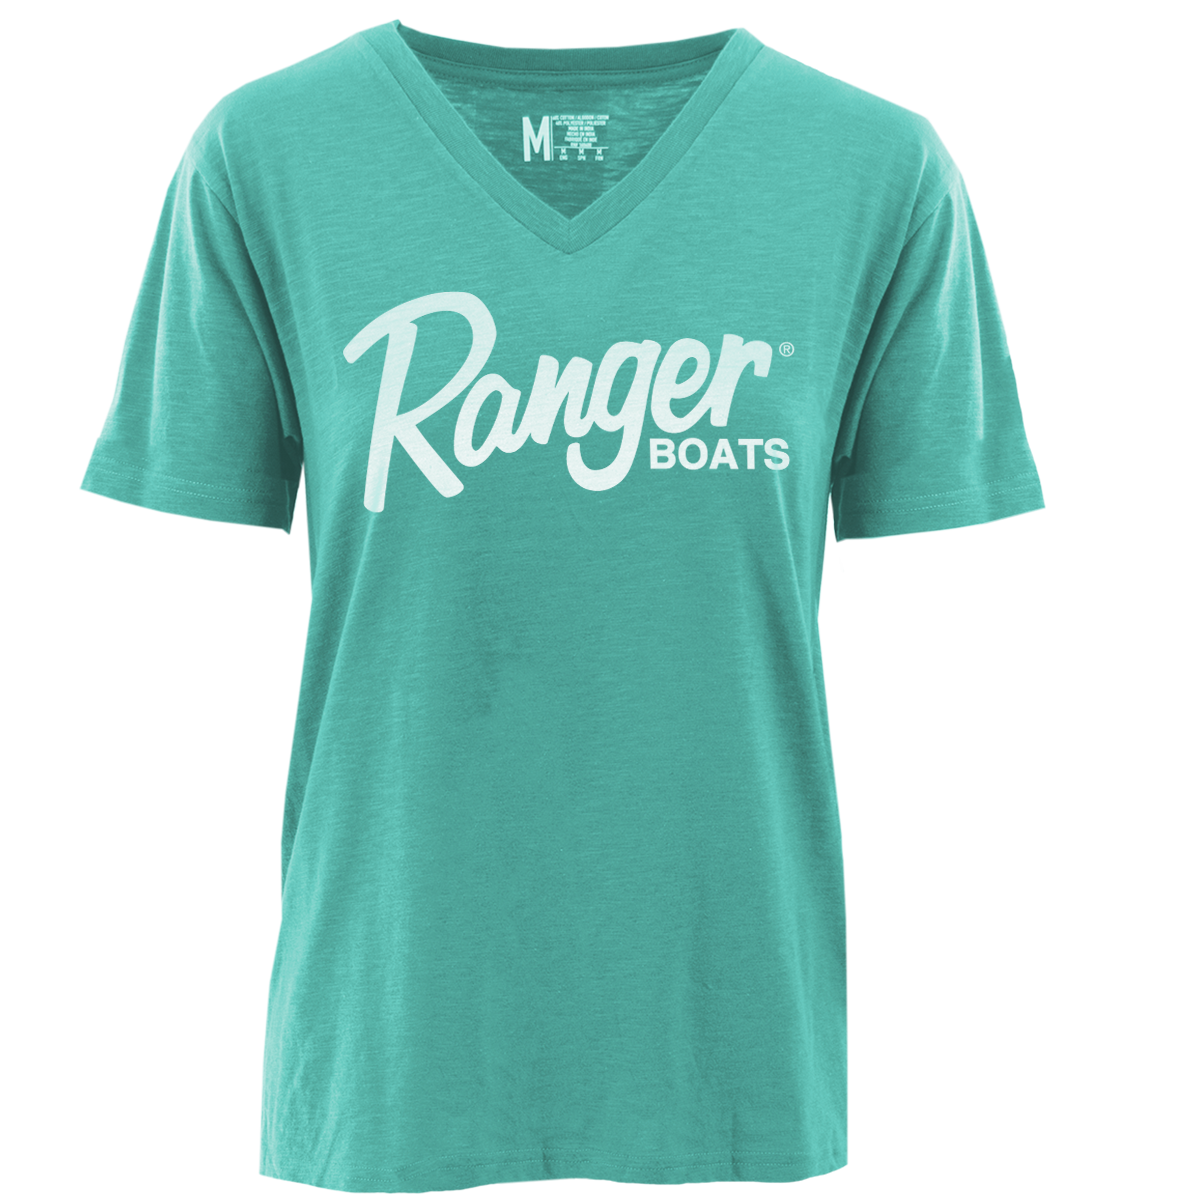 NEW sale! Ranger Boats Team Fishing boat Logo T Shirt